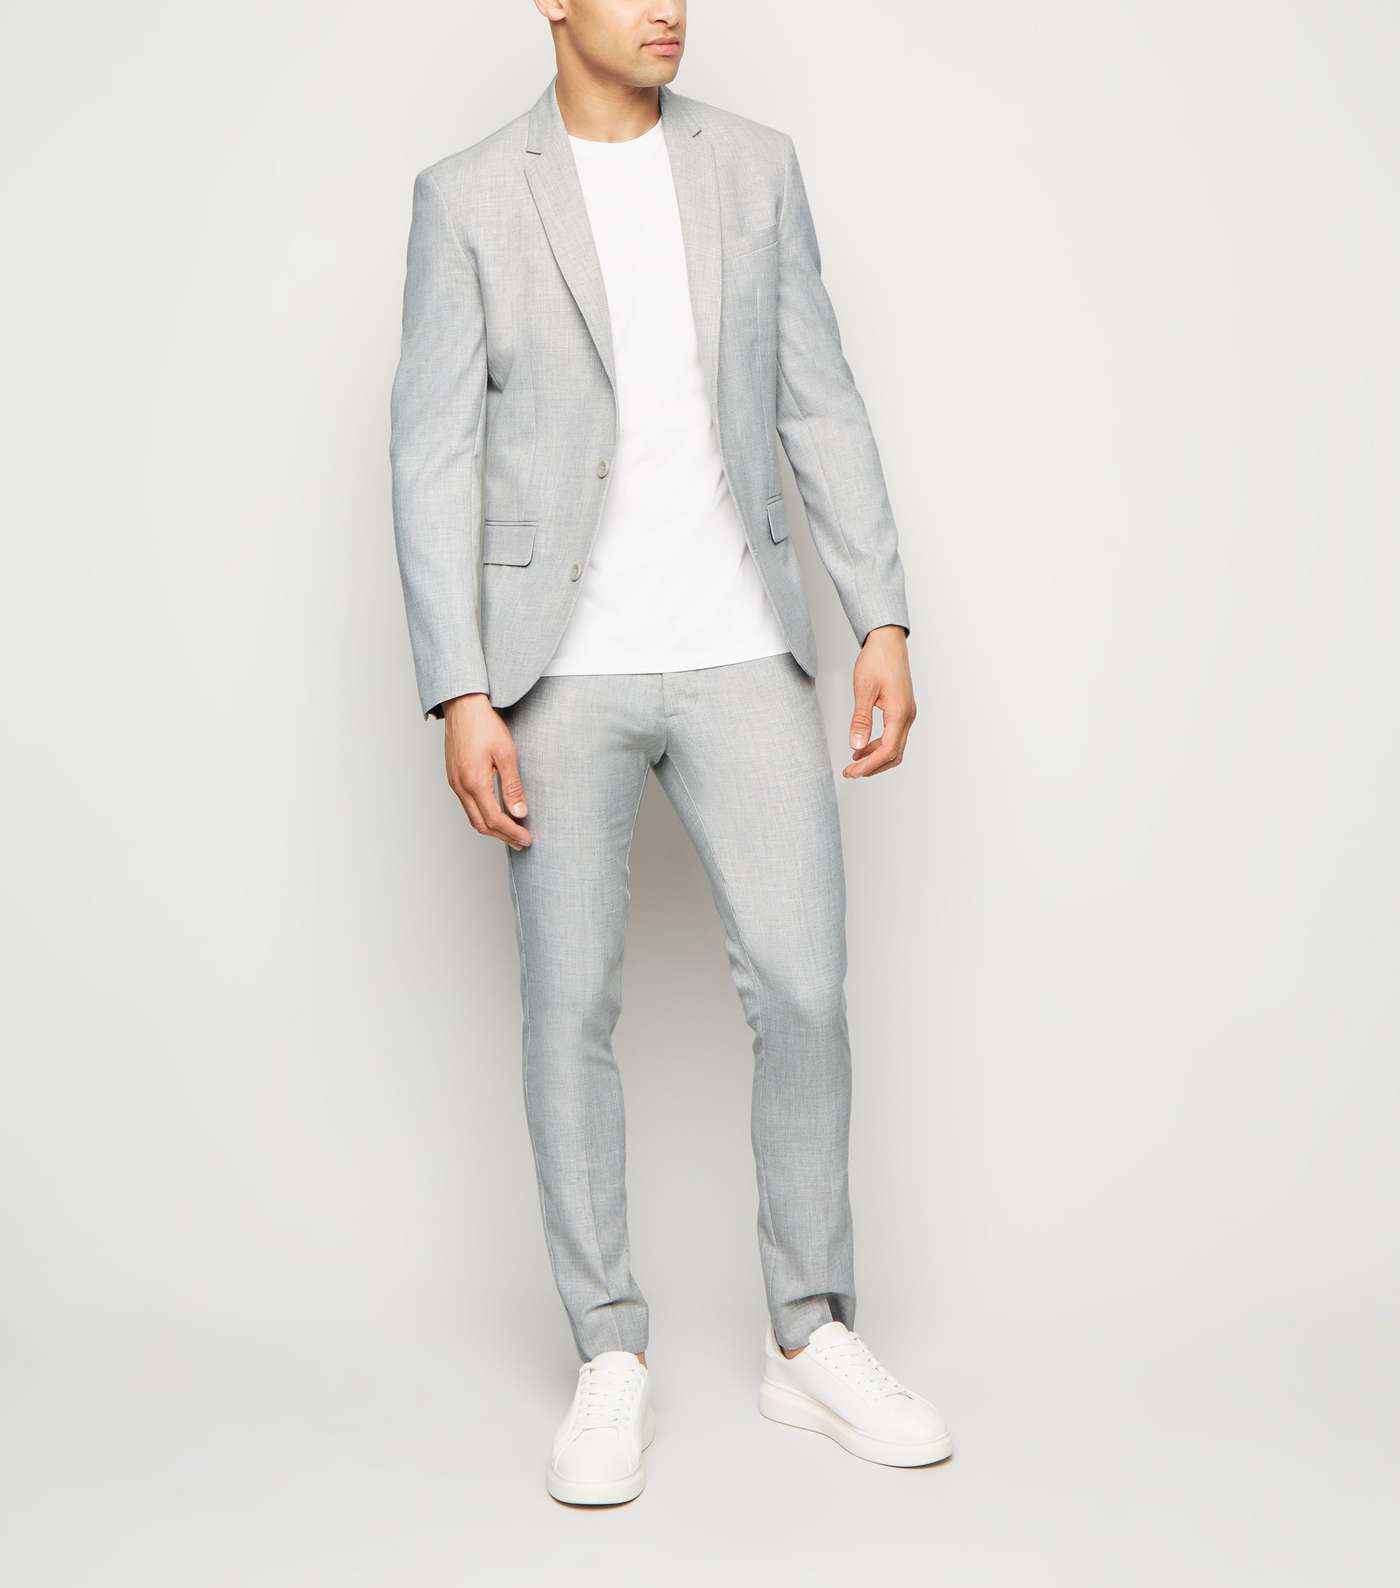 Light Grey Suit Jacket Image 2